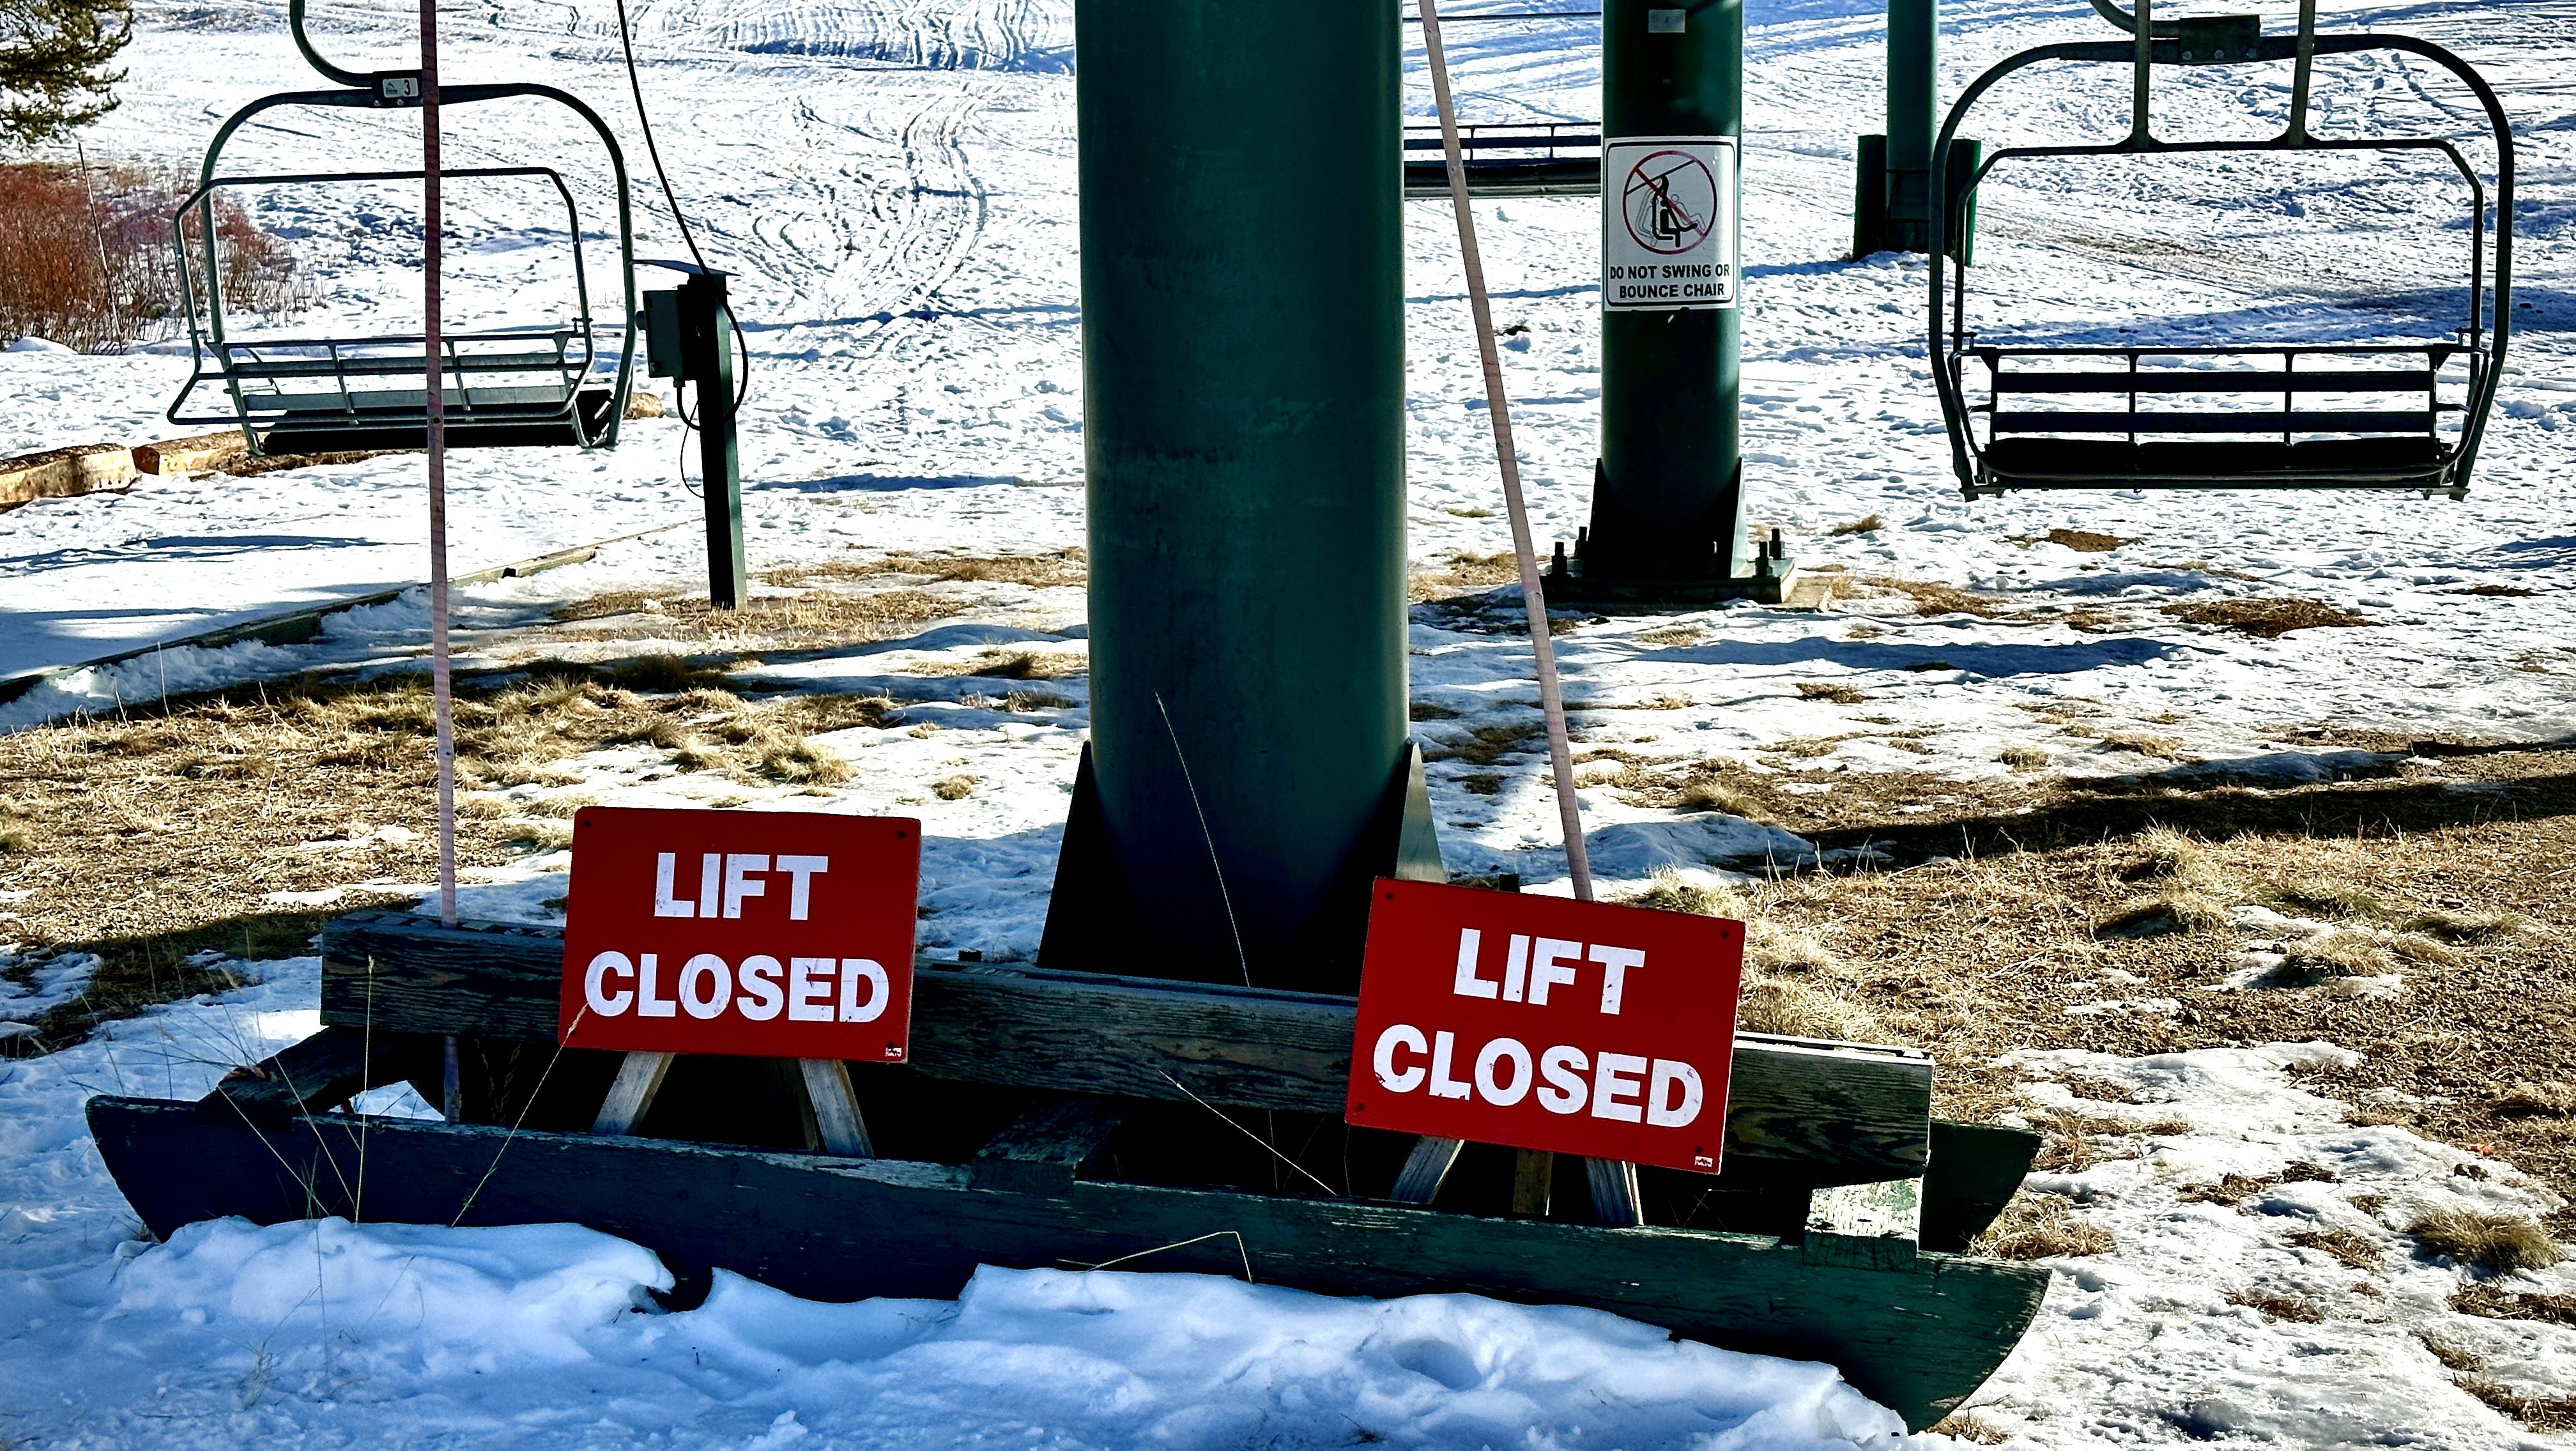 Snowmaking machines assist ski resorts to open earlier